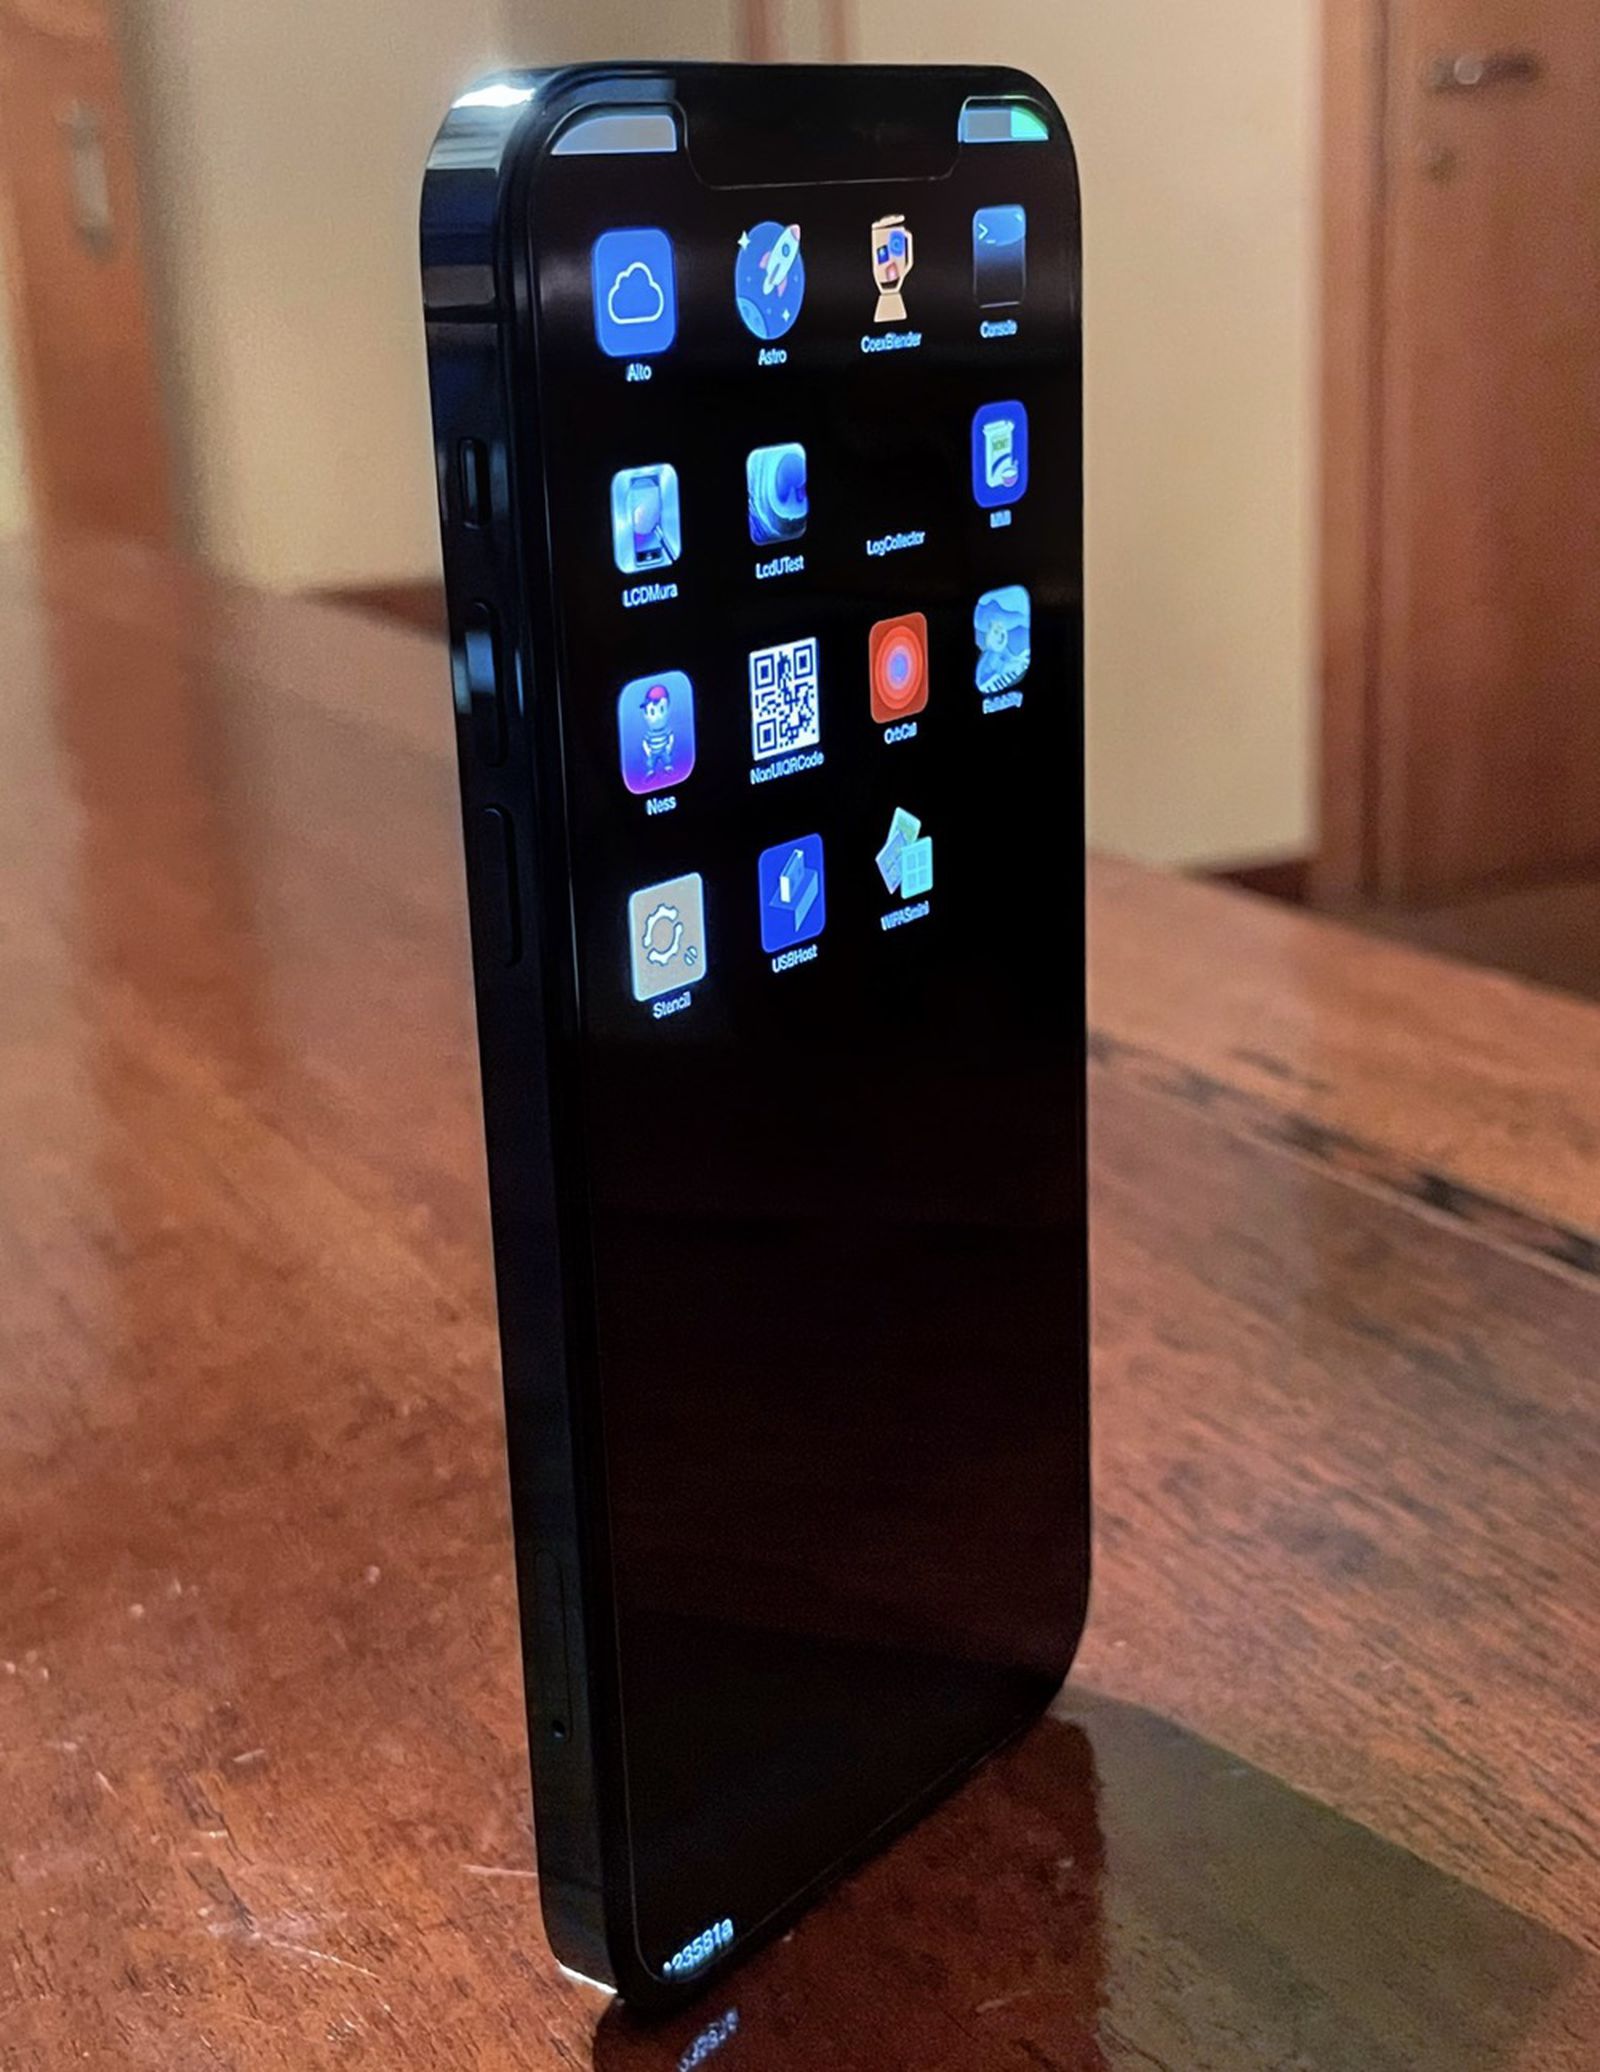 Prototype iPhone 12 Pro shown in photos